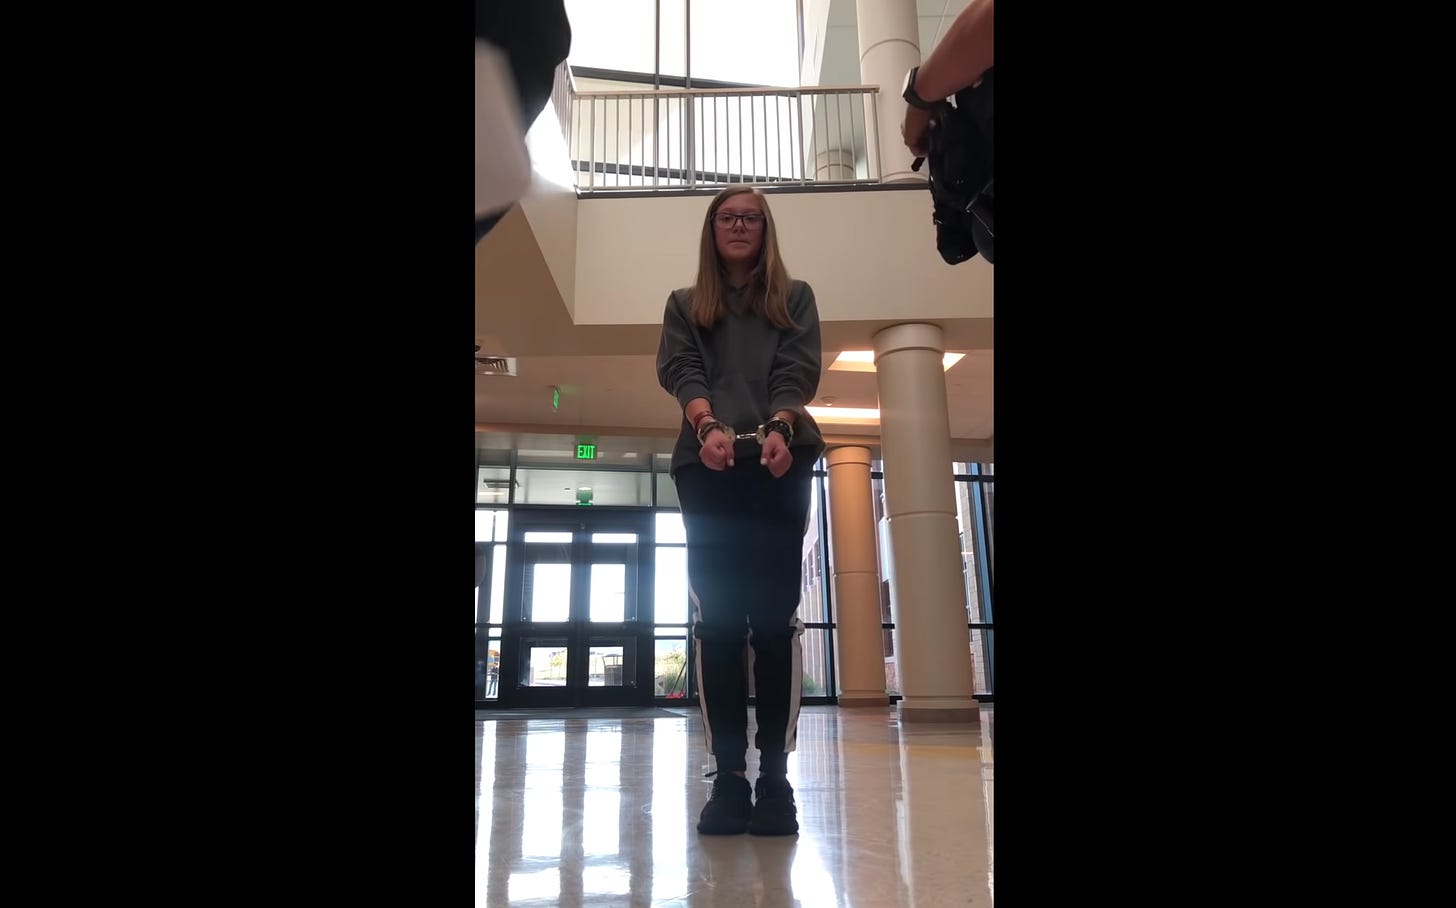 Handcuffed teenage girl stands in school atrium.